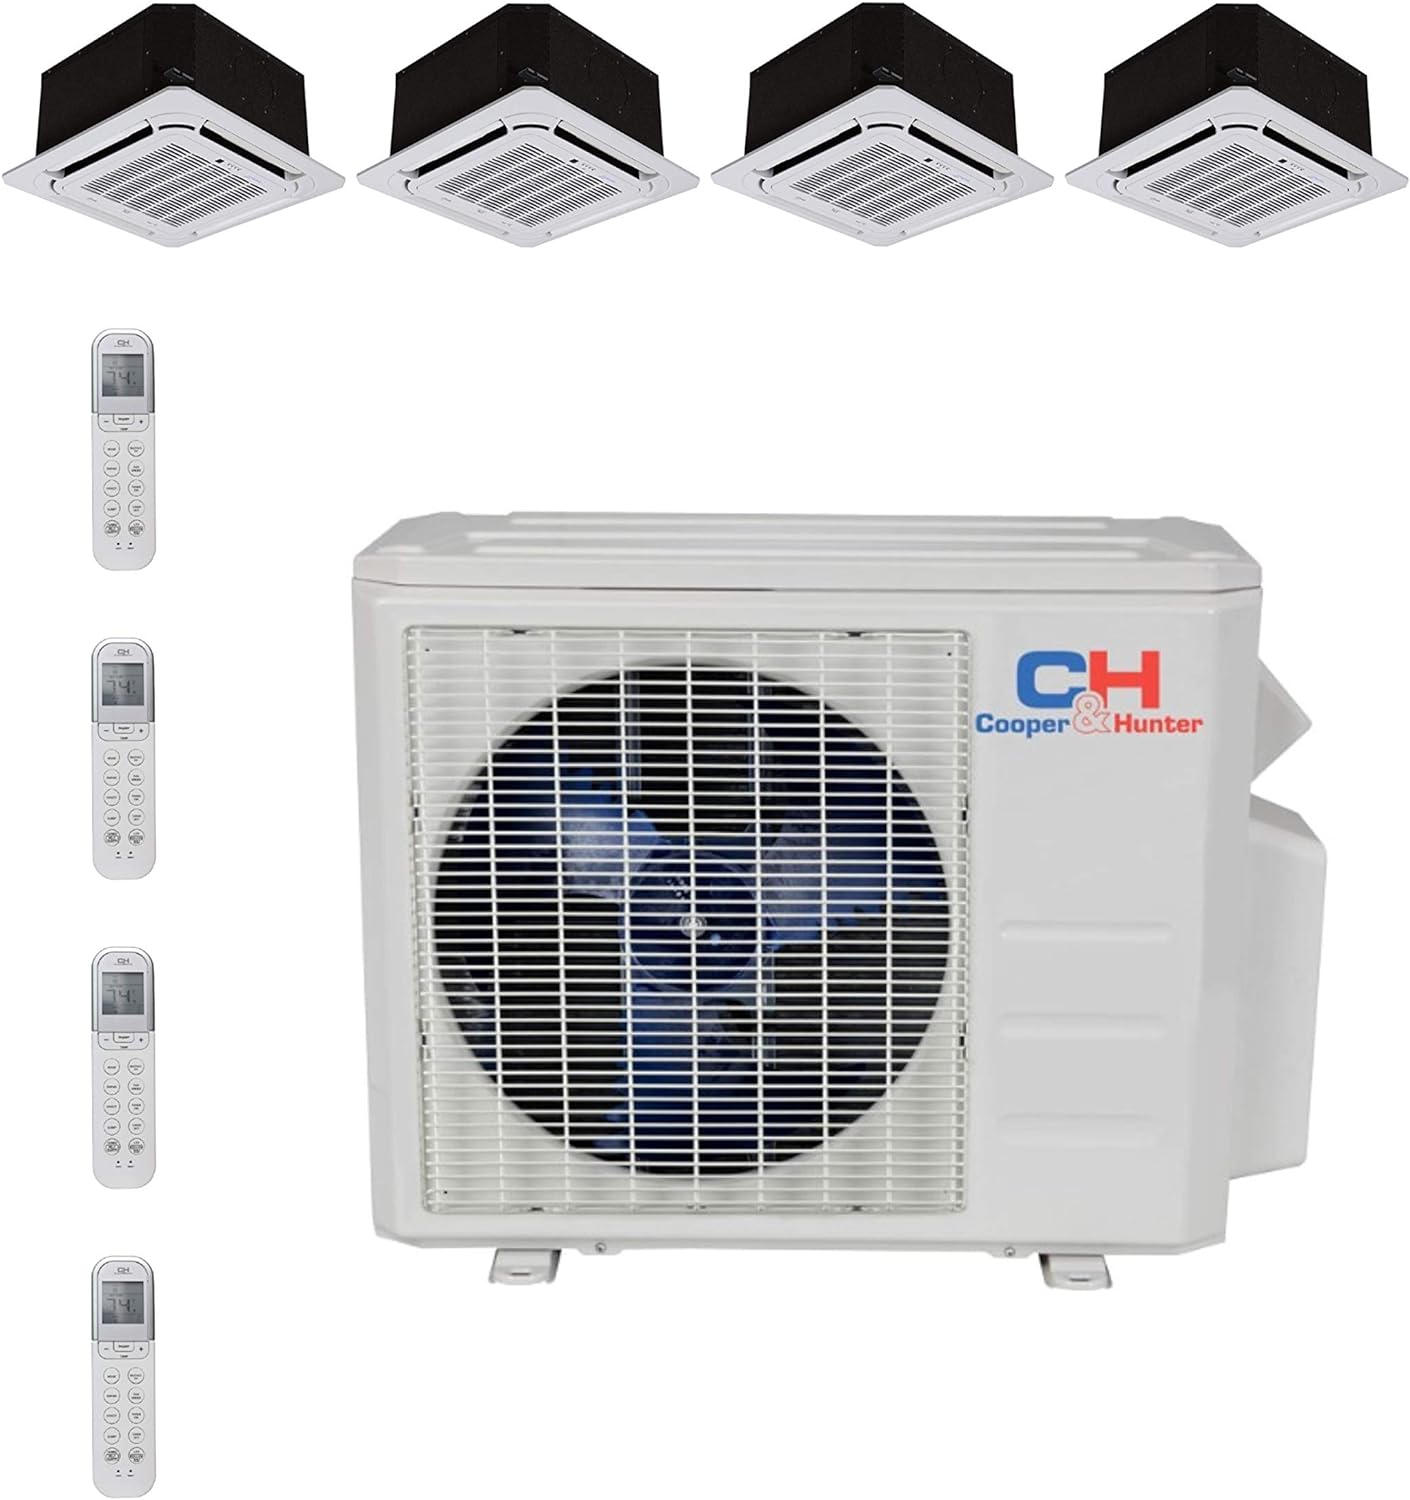 COOPER AND HUNTER Quad 4 Zone Ductless Mini Split Air Conditioner Ceiling Cassette Heat Pump 9000 9000 9000 9000